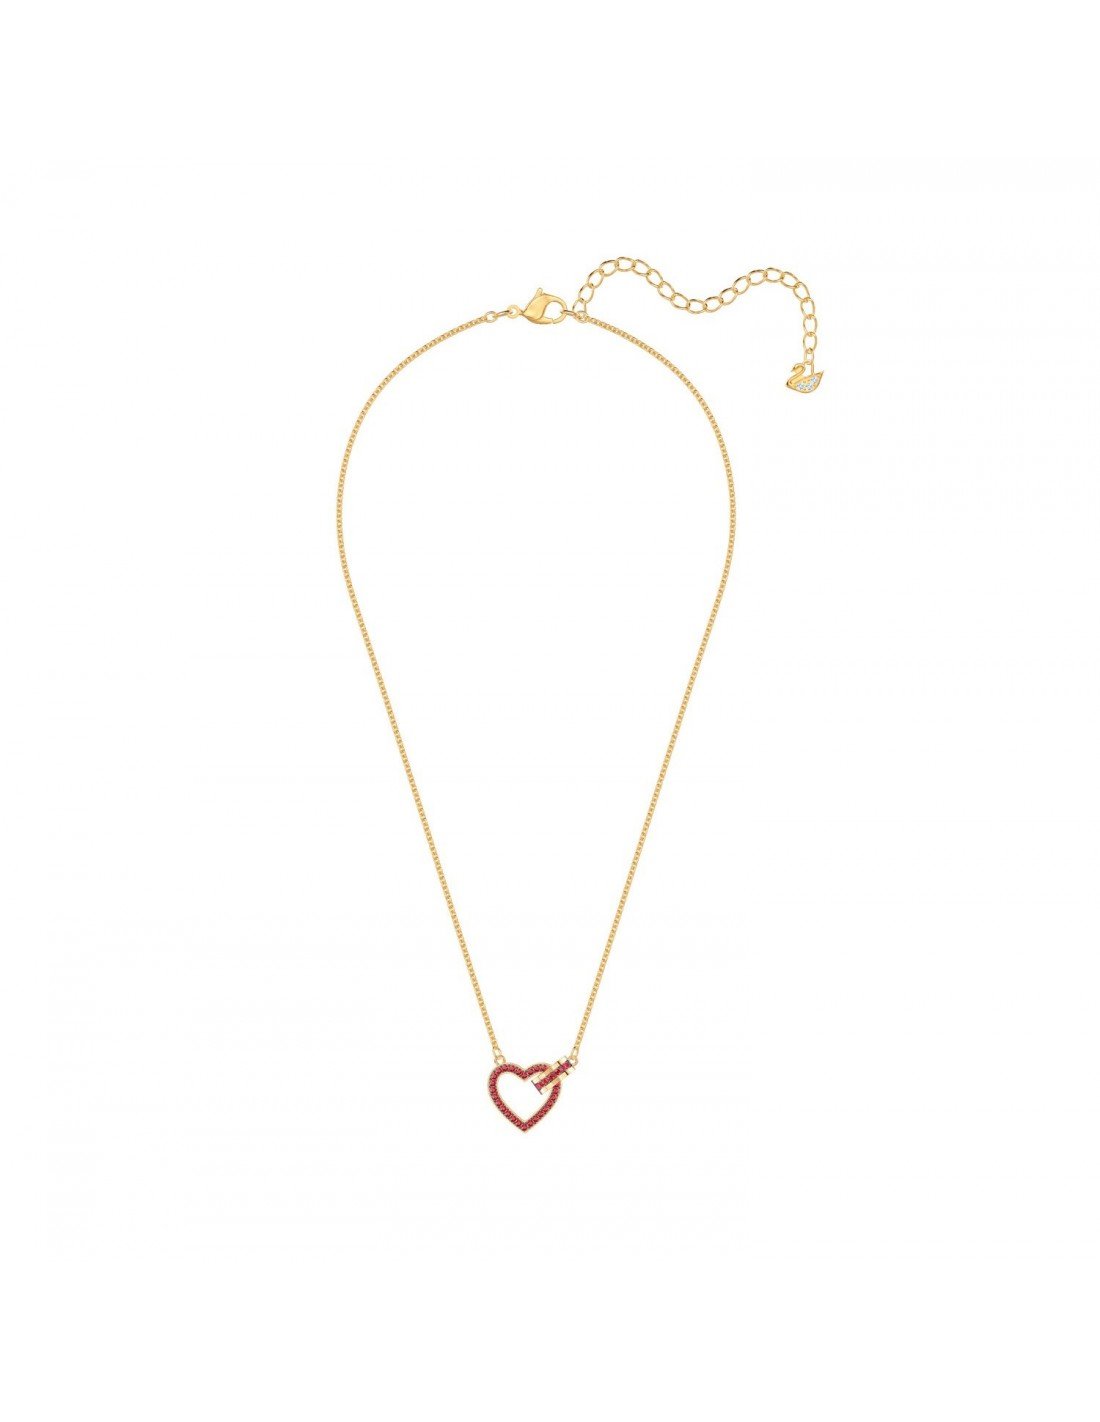 SWAROVSKI Lovely Necklace - Red & Gold plating #5465683